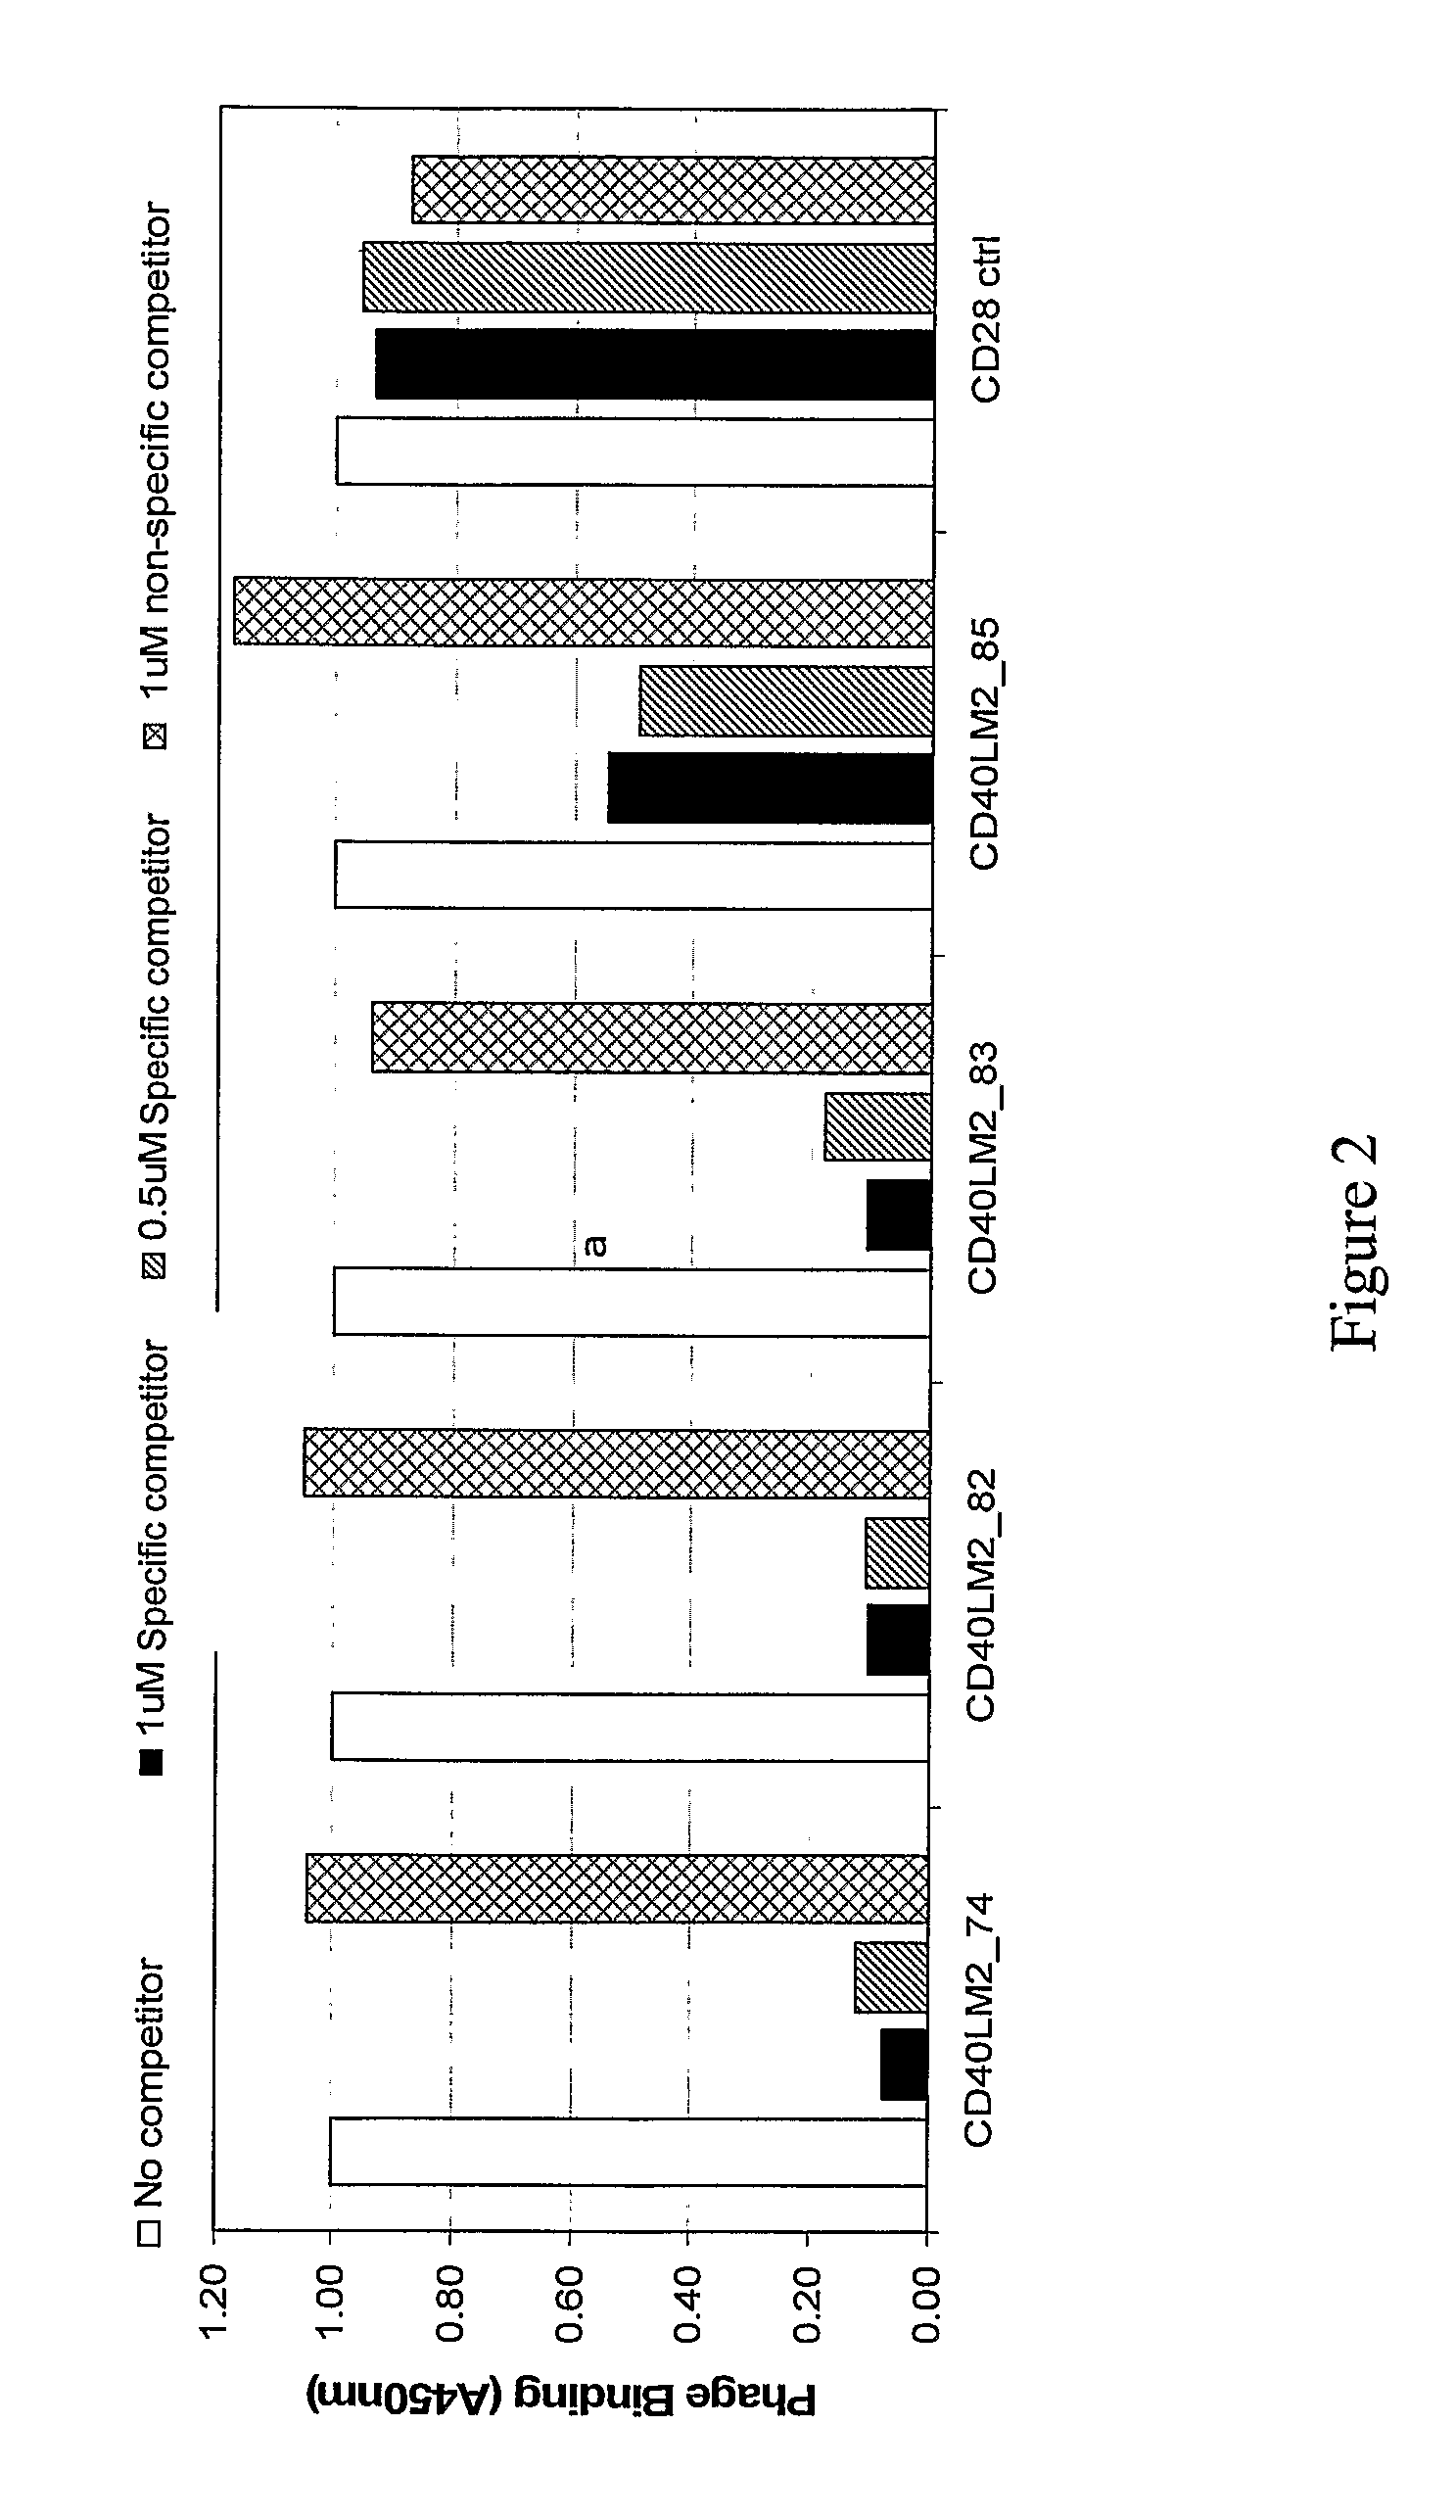 CD40-L Inhibitory Peptides